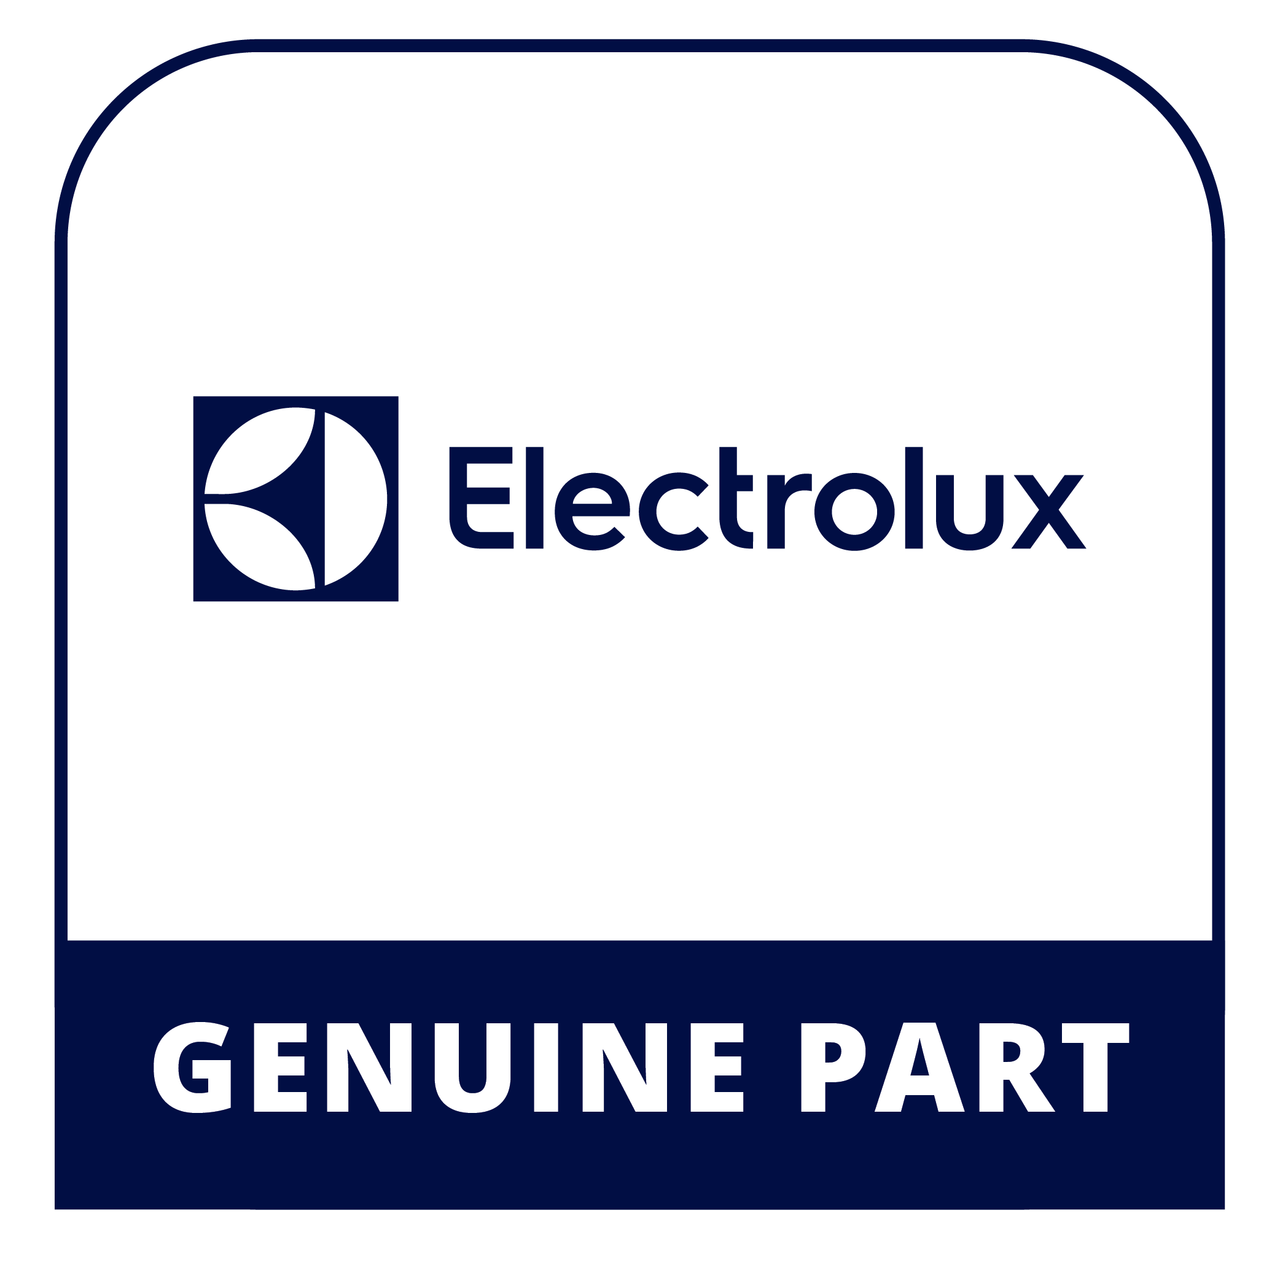 Frigidaire - Electrolux 5304510622 Front Panel - Genuine Electrolux Part